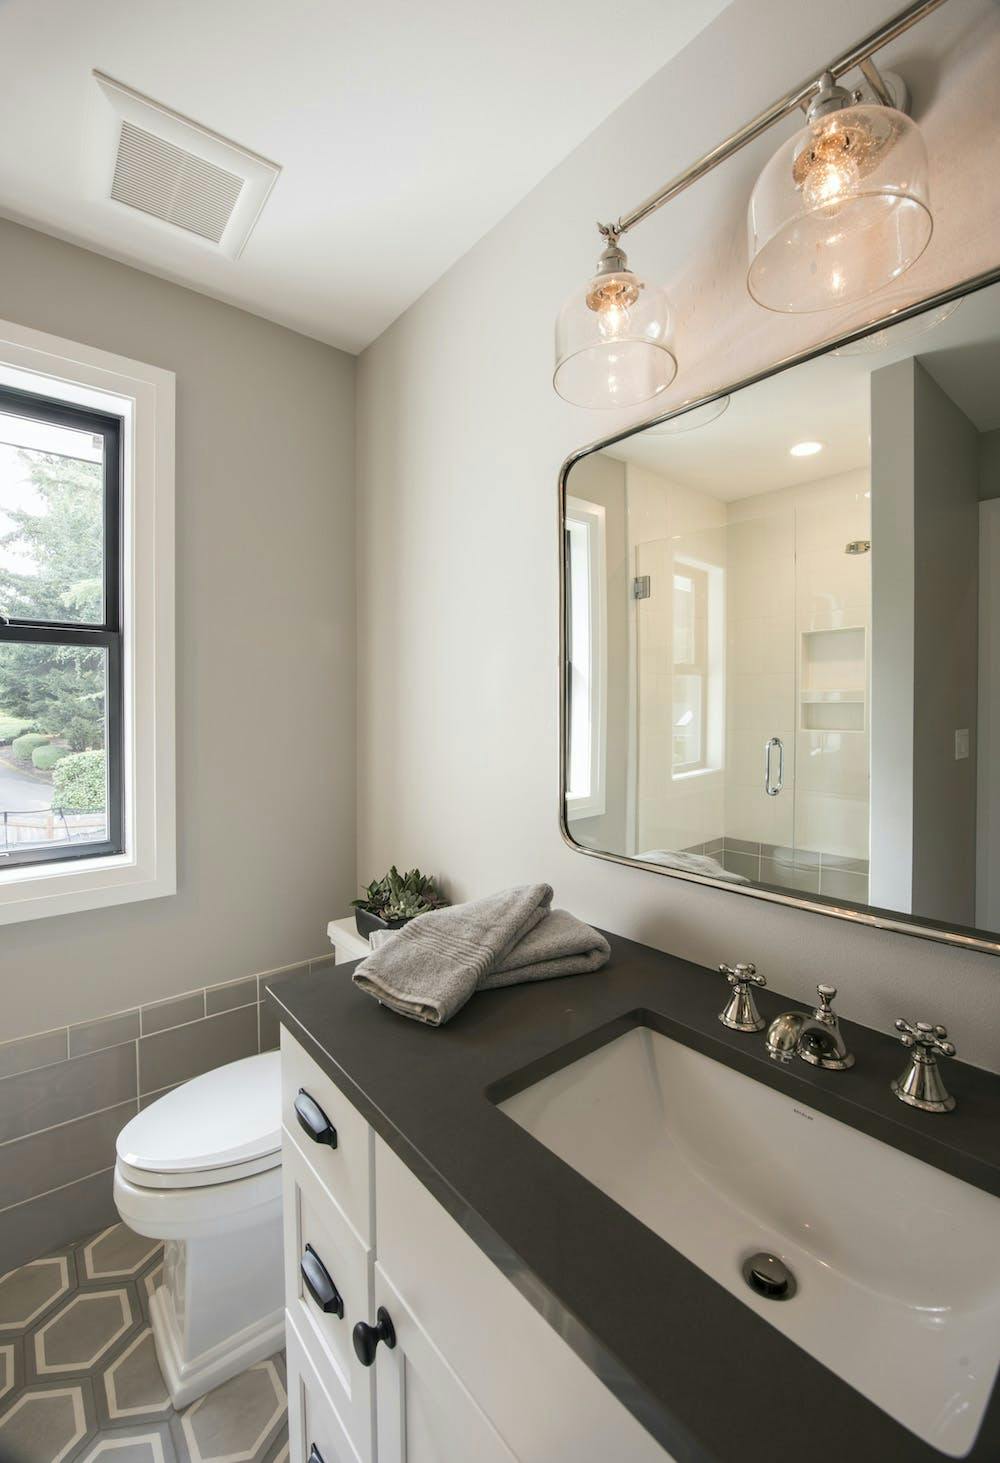 Image 38 of Landons Bathroom Silsetone Cemento Spa 1 in 2018 Northwest Idea House Features Dekton & Silestone Surfaces - Cosentino